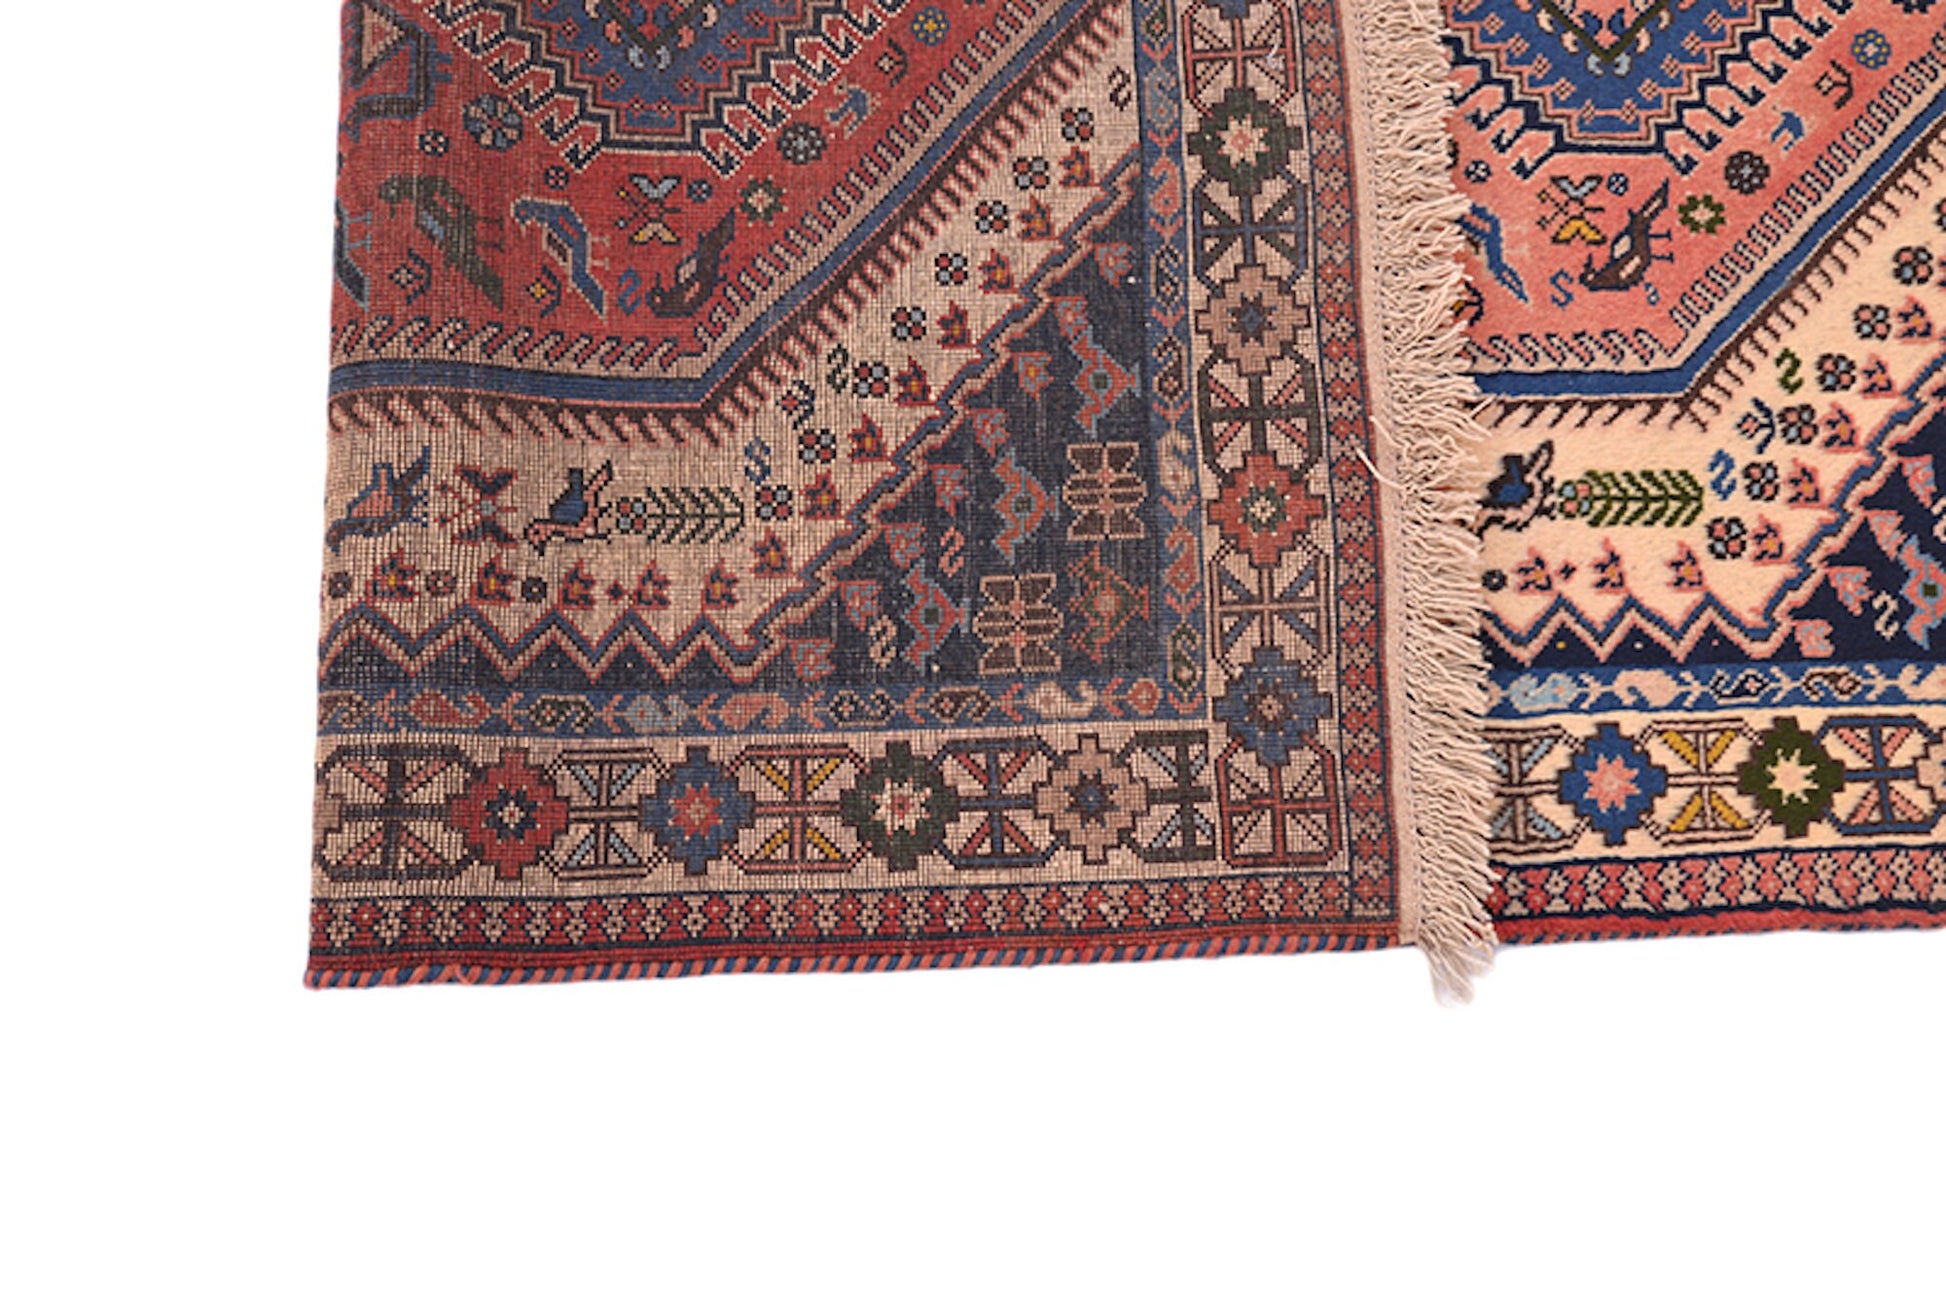 3 x 5 Pink Blue Beige Vintage Rug | Three Central Tribal Diamond Medallions | Rustic Bohemian Persian Style Wool Area Rug